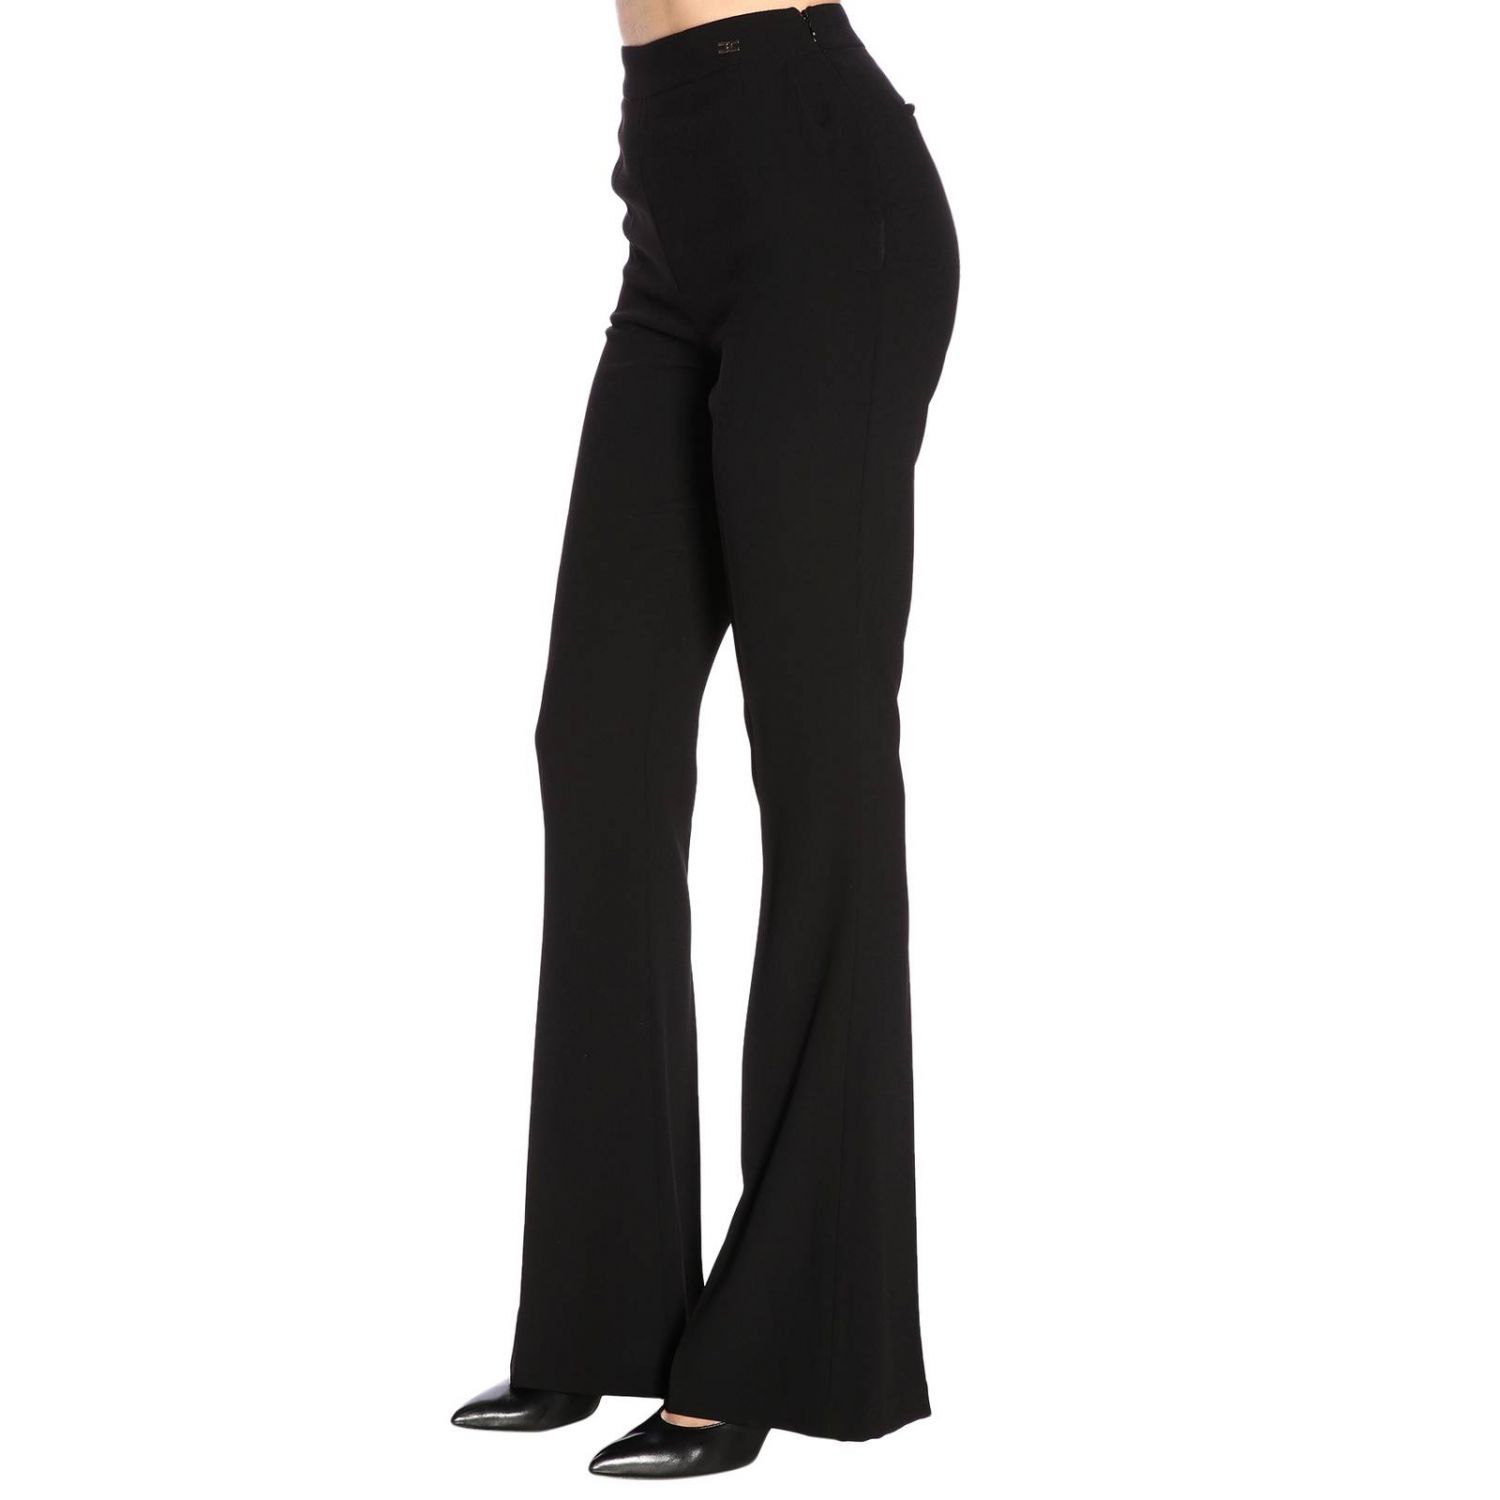 Elisabetta Franchi Outlet: Pants women - Black | Pants Elisabetta ...